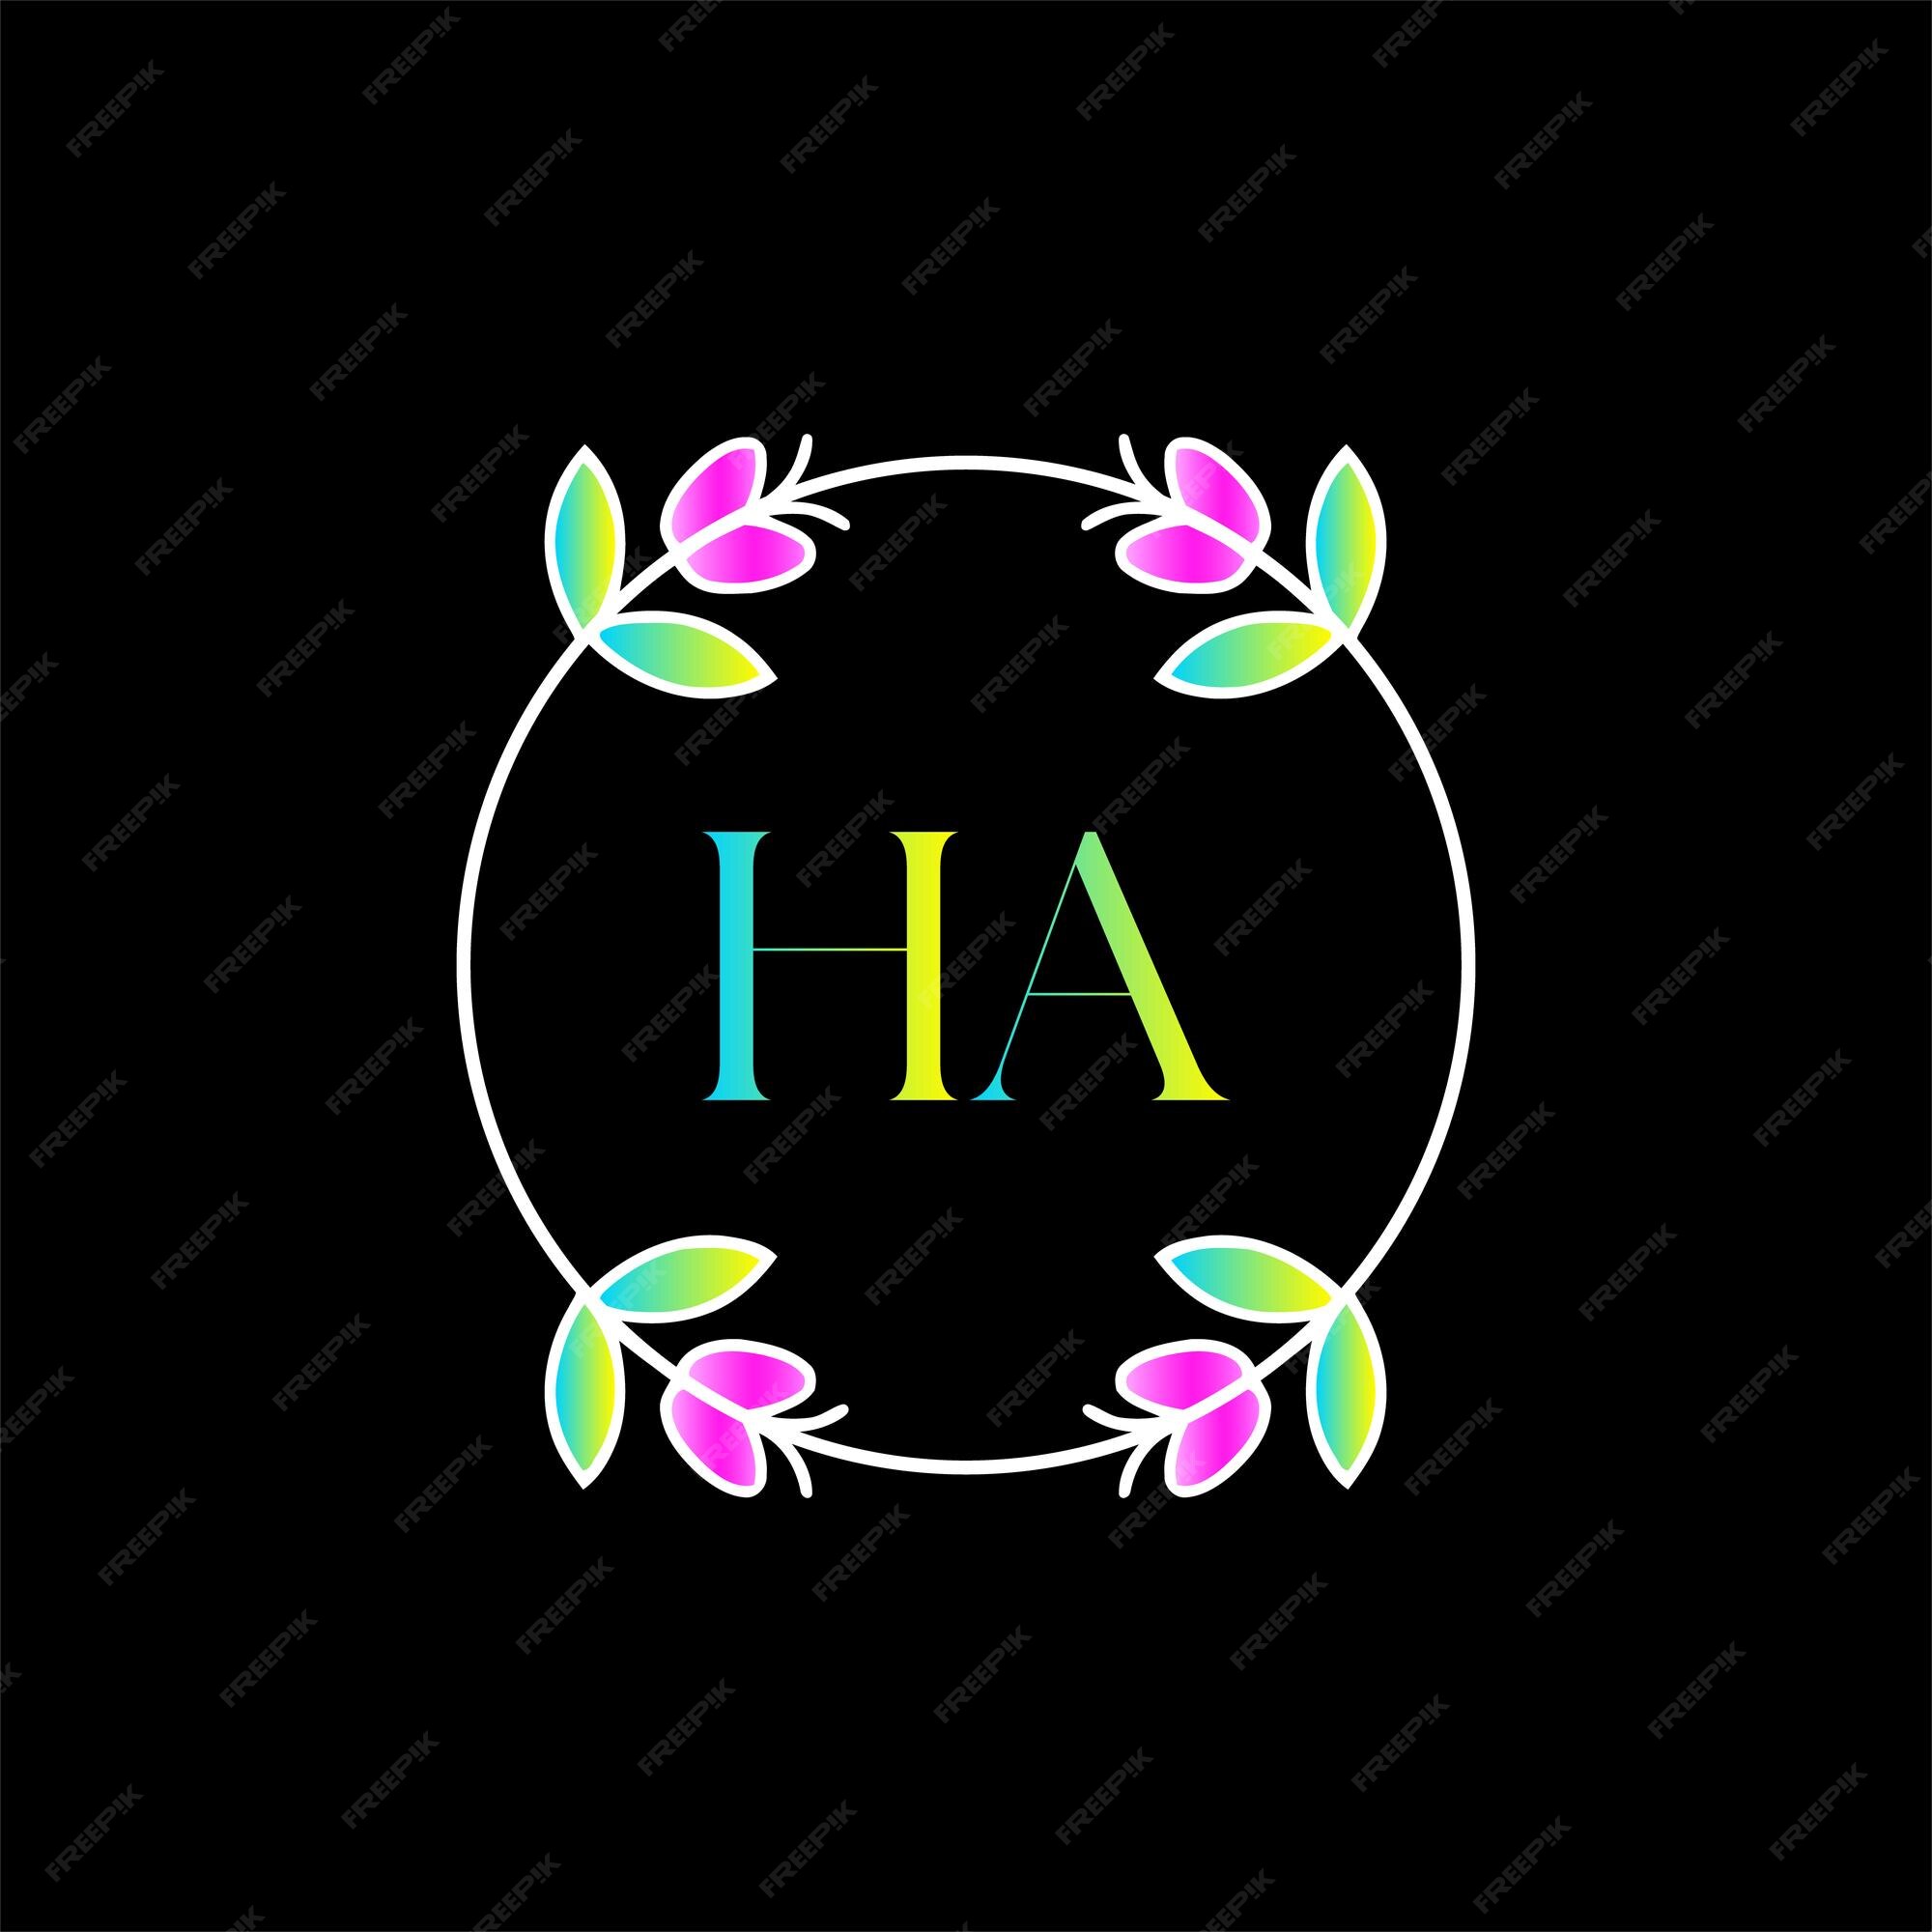 Ha initial wedding monogram logo Royalty Free Vector Image